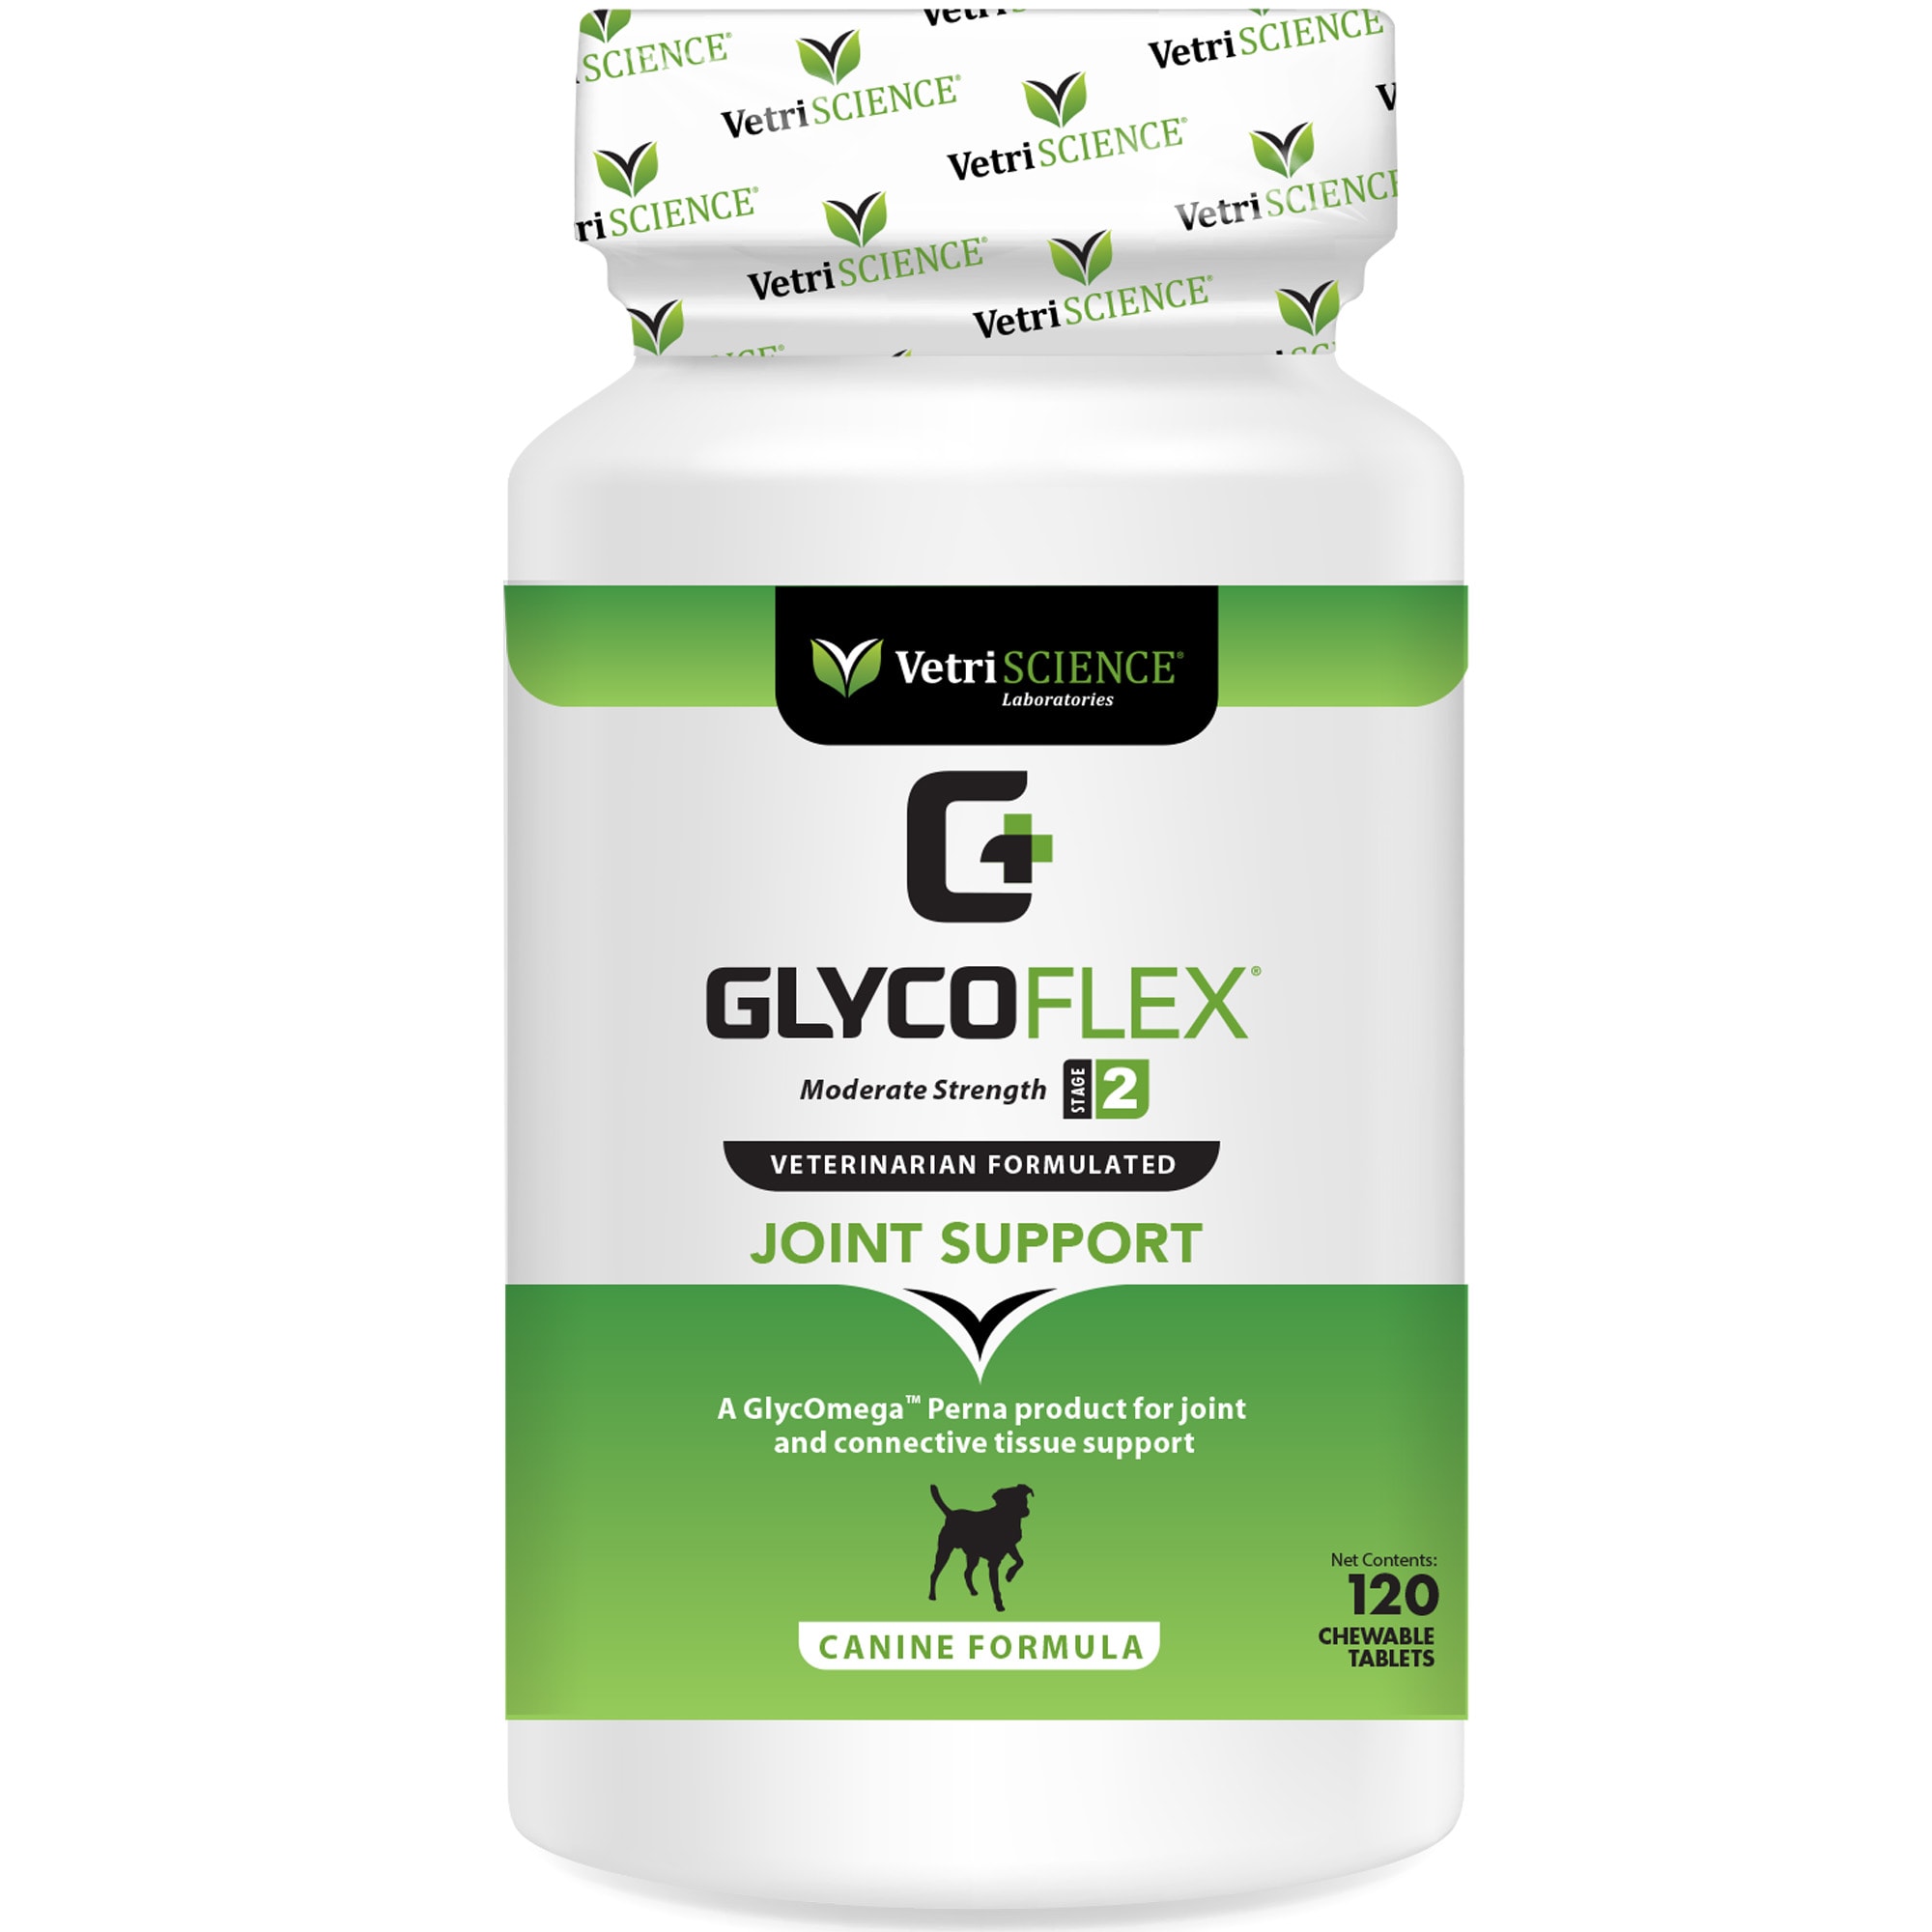 Photos - Other Pet Supplies VetriSCIENCE GlycoFlex 2 Chewable Dog Tablets, Count of 120 0 